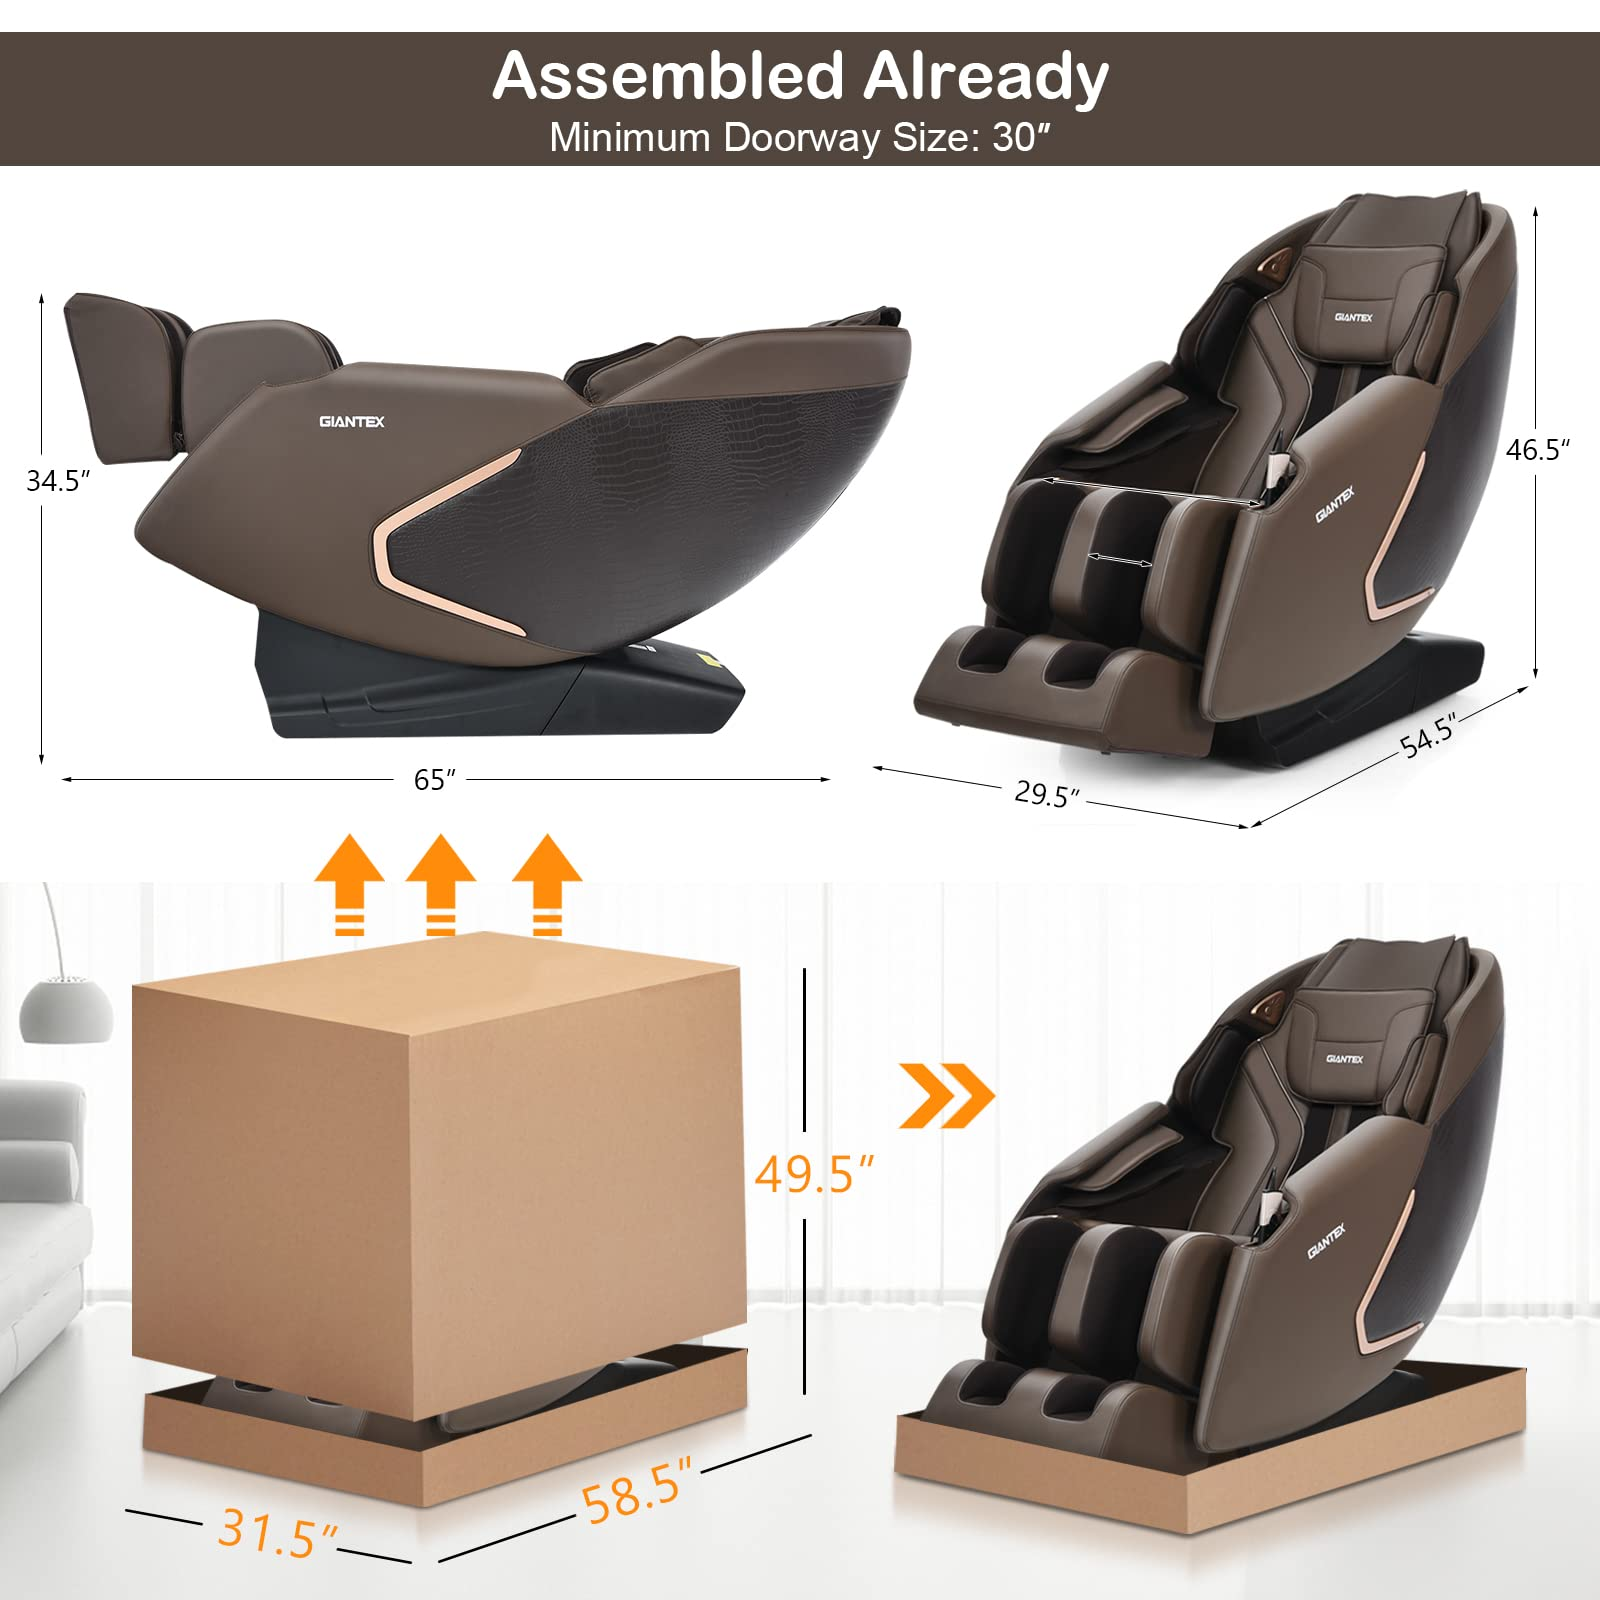 Giantex Full Body Massage Chair, Zero Gravity Recliner Chair on Wheels